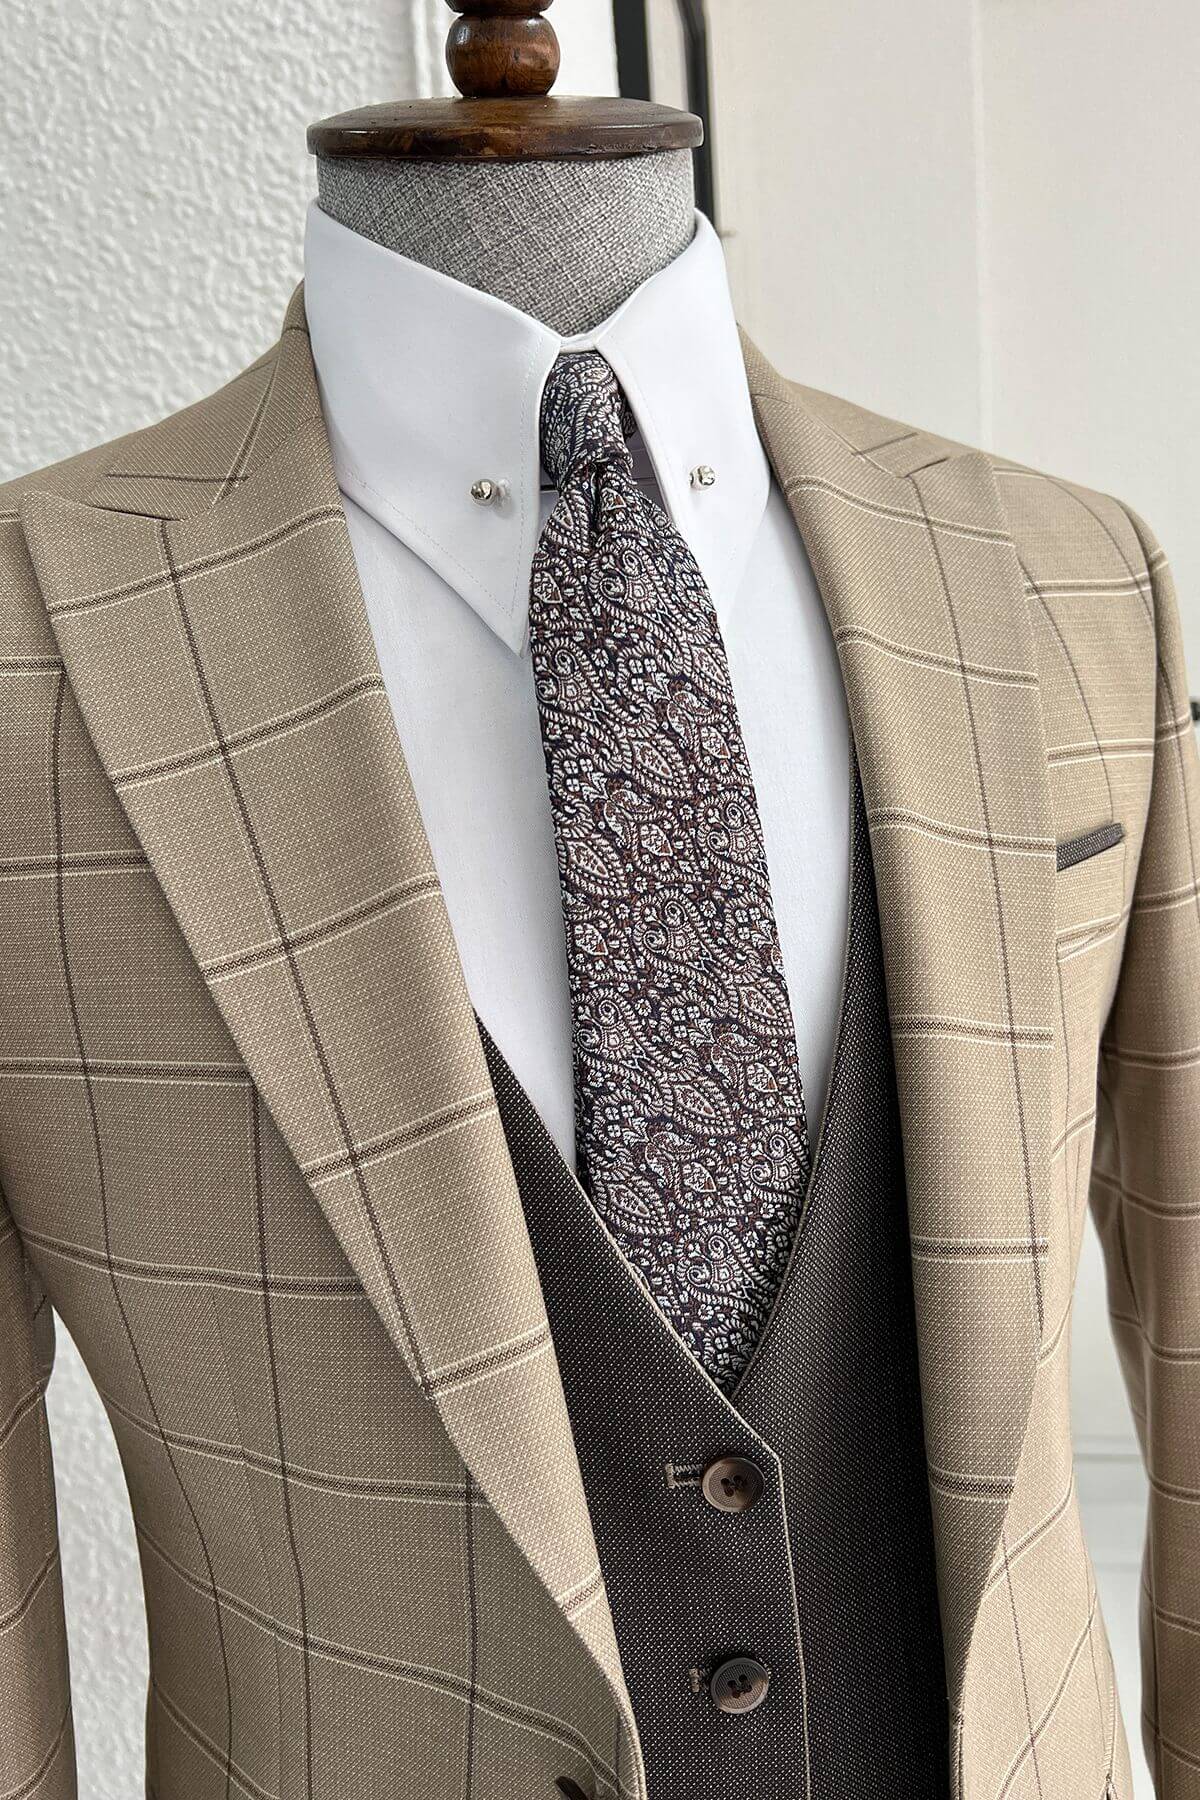 Beige and Brown Wool Suit